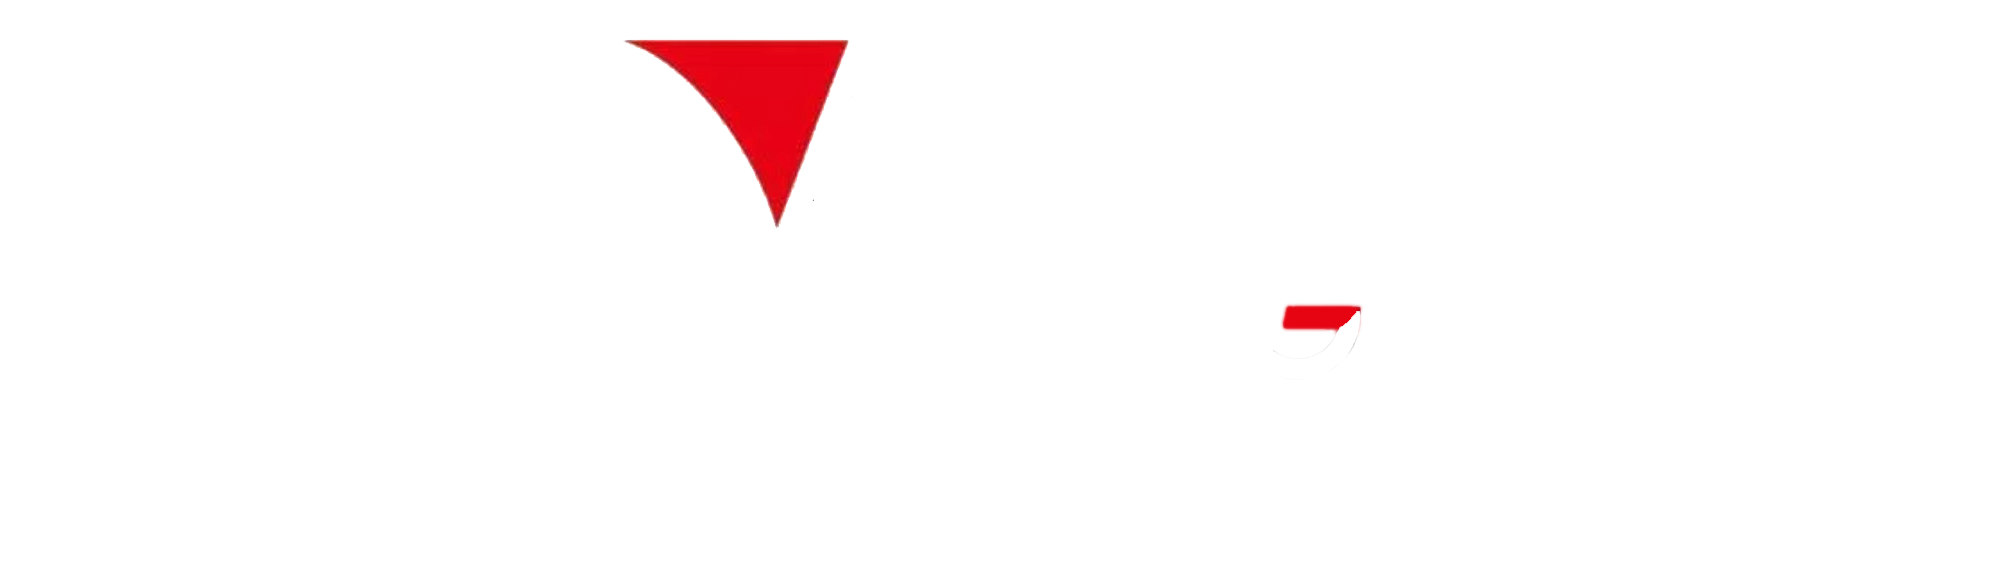 YC Auto Group Logo